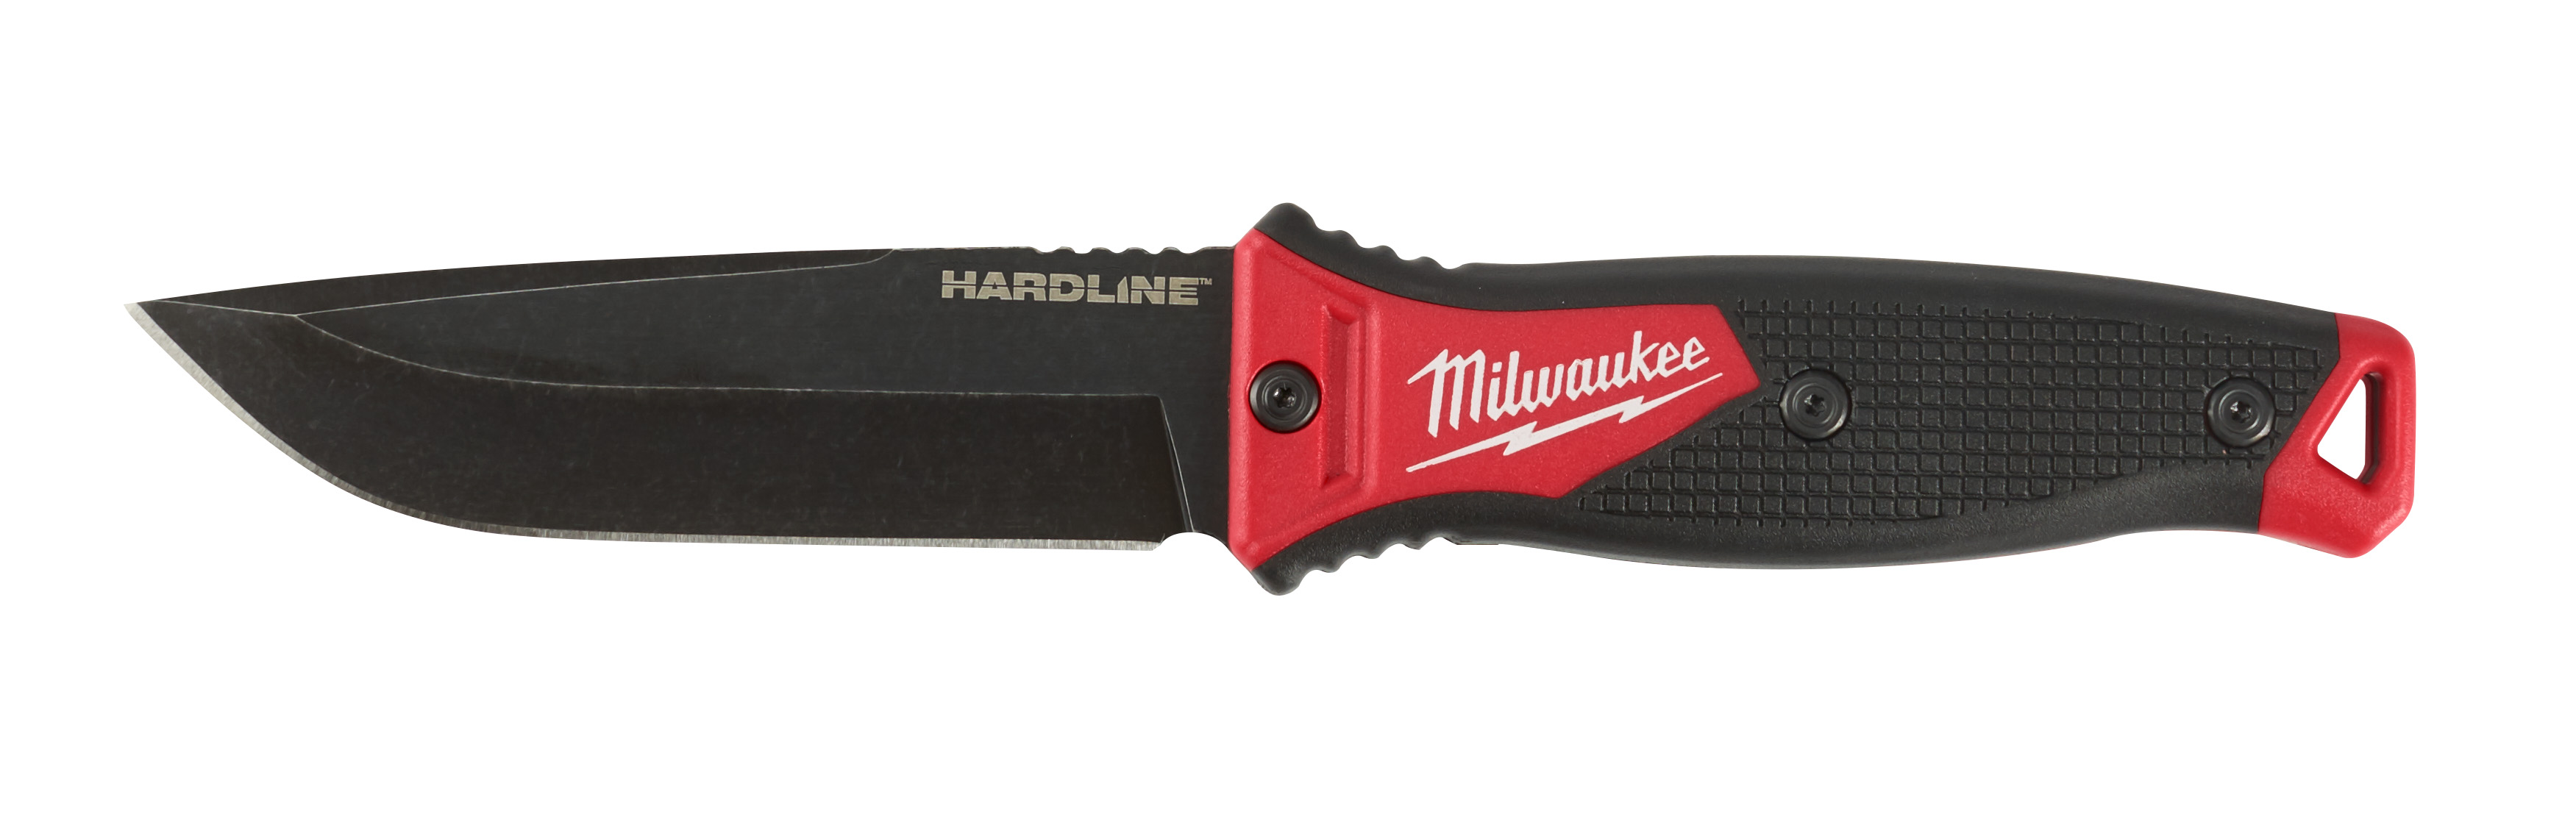 Нож фиксируемое лезвие. Нож Milwaukee Hardline. Нож с фиксированным лезвием Milwaukee 4932464828. Нож Милуоки хардлайн. Нож Hardline с фиксированным лезвием.